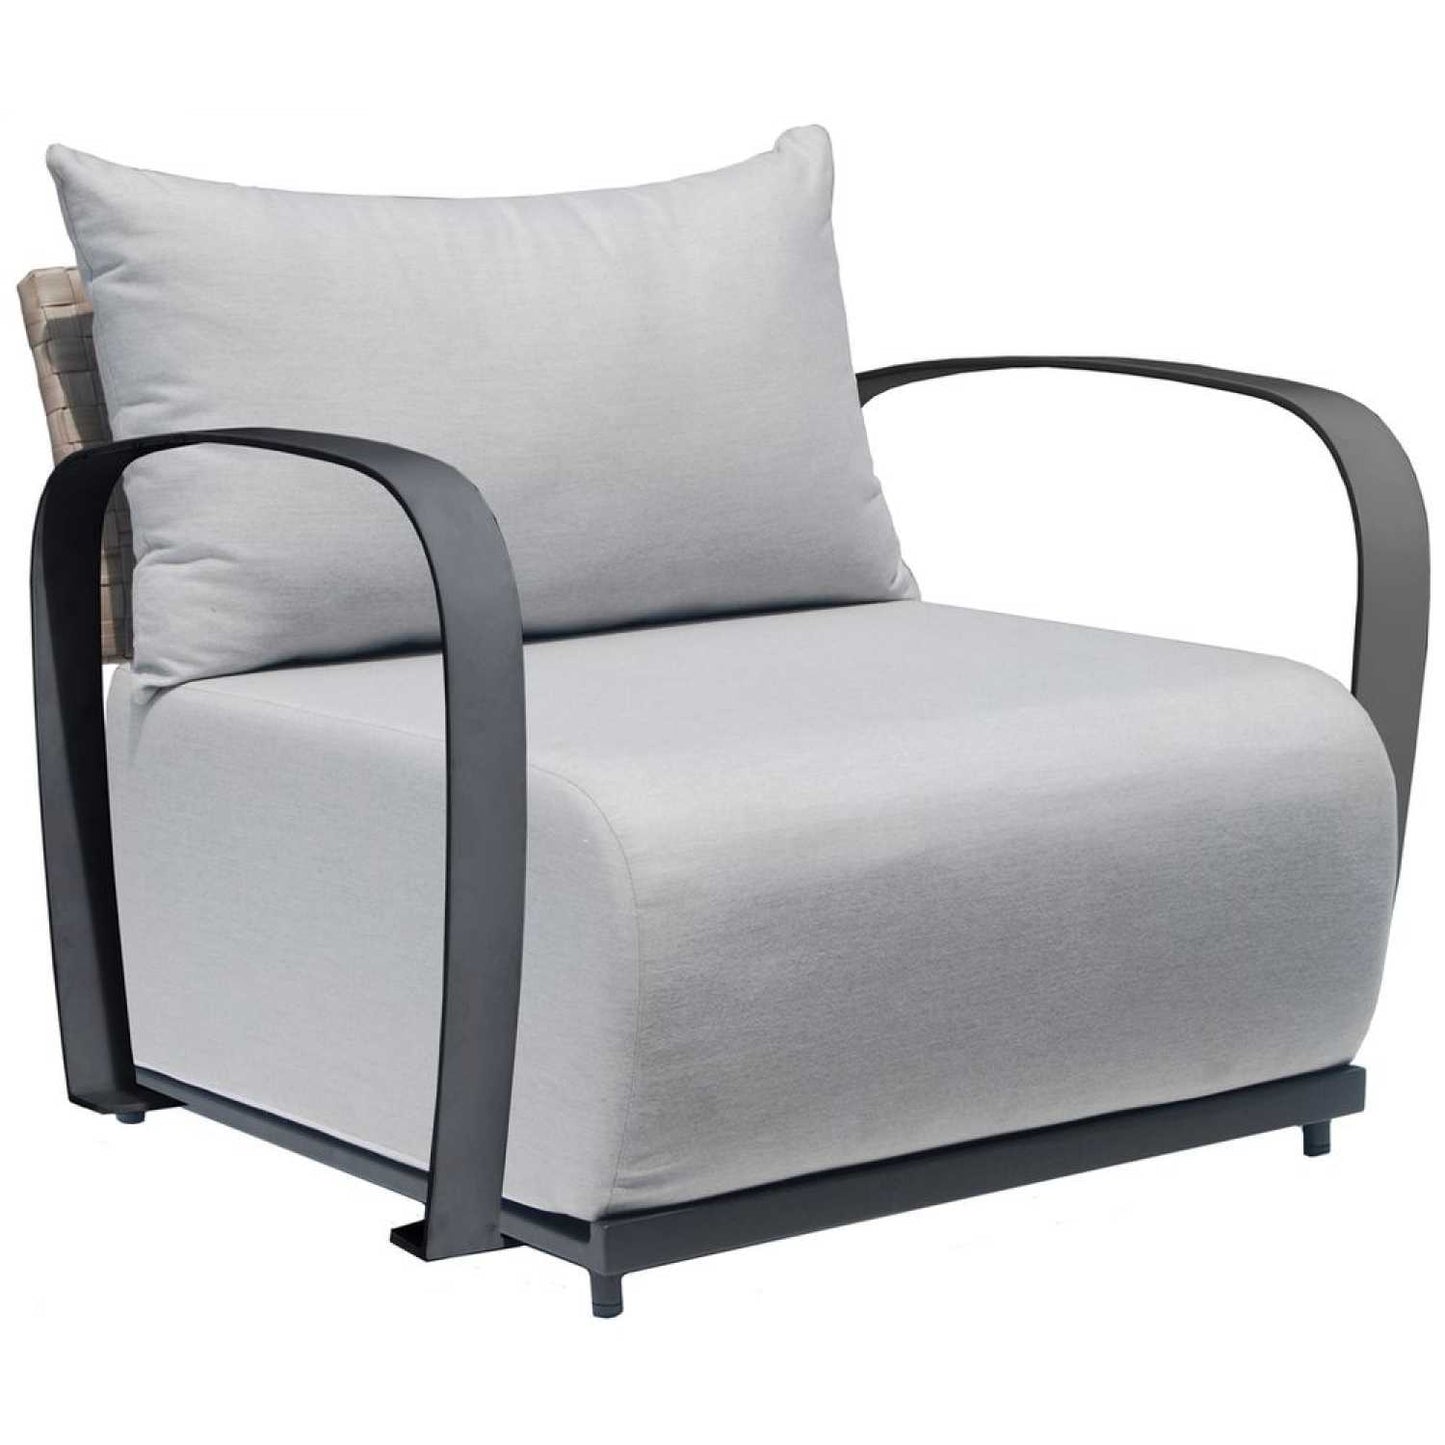 Windsor Carbon Arm Chair - PadioLiving - Windsor Carbon Arm Chair - PadioLiving